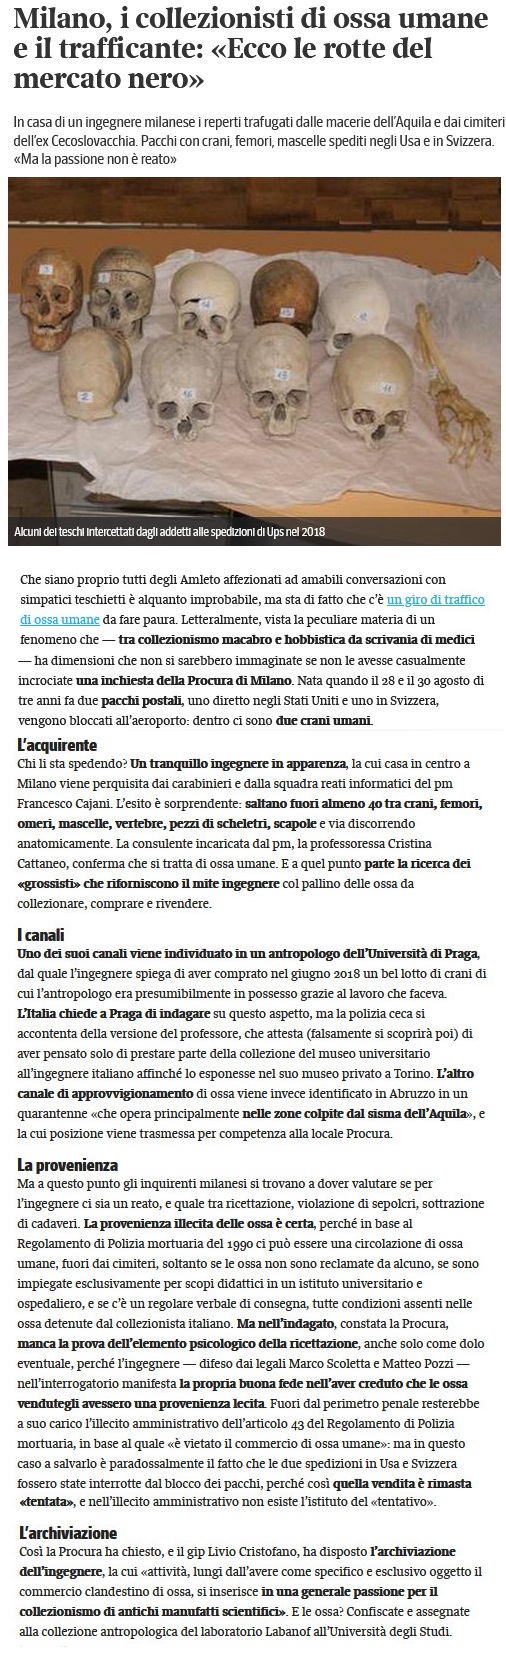 MILANO e dintorni..... - Pagina 5 Milano61